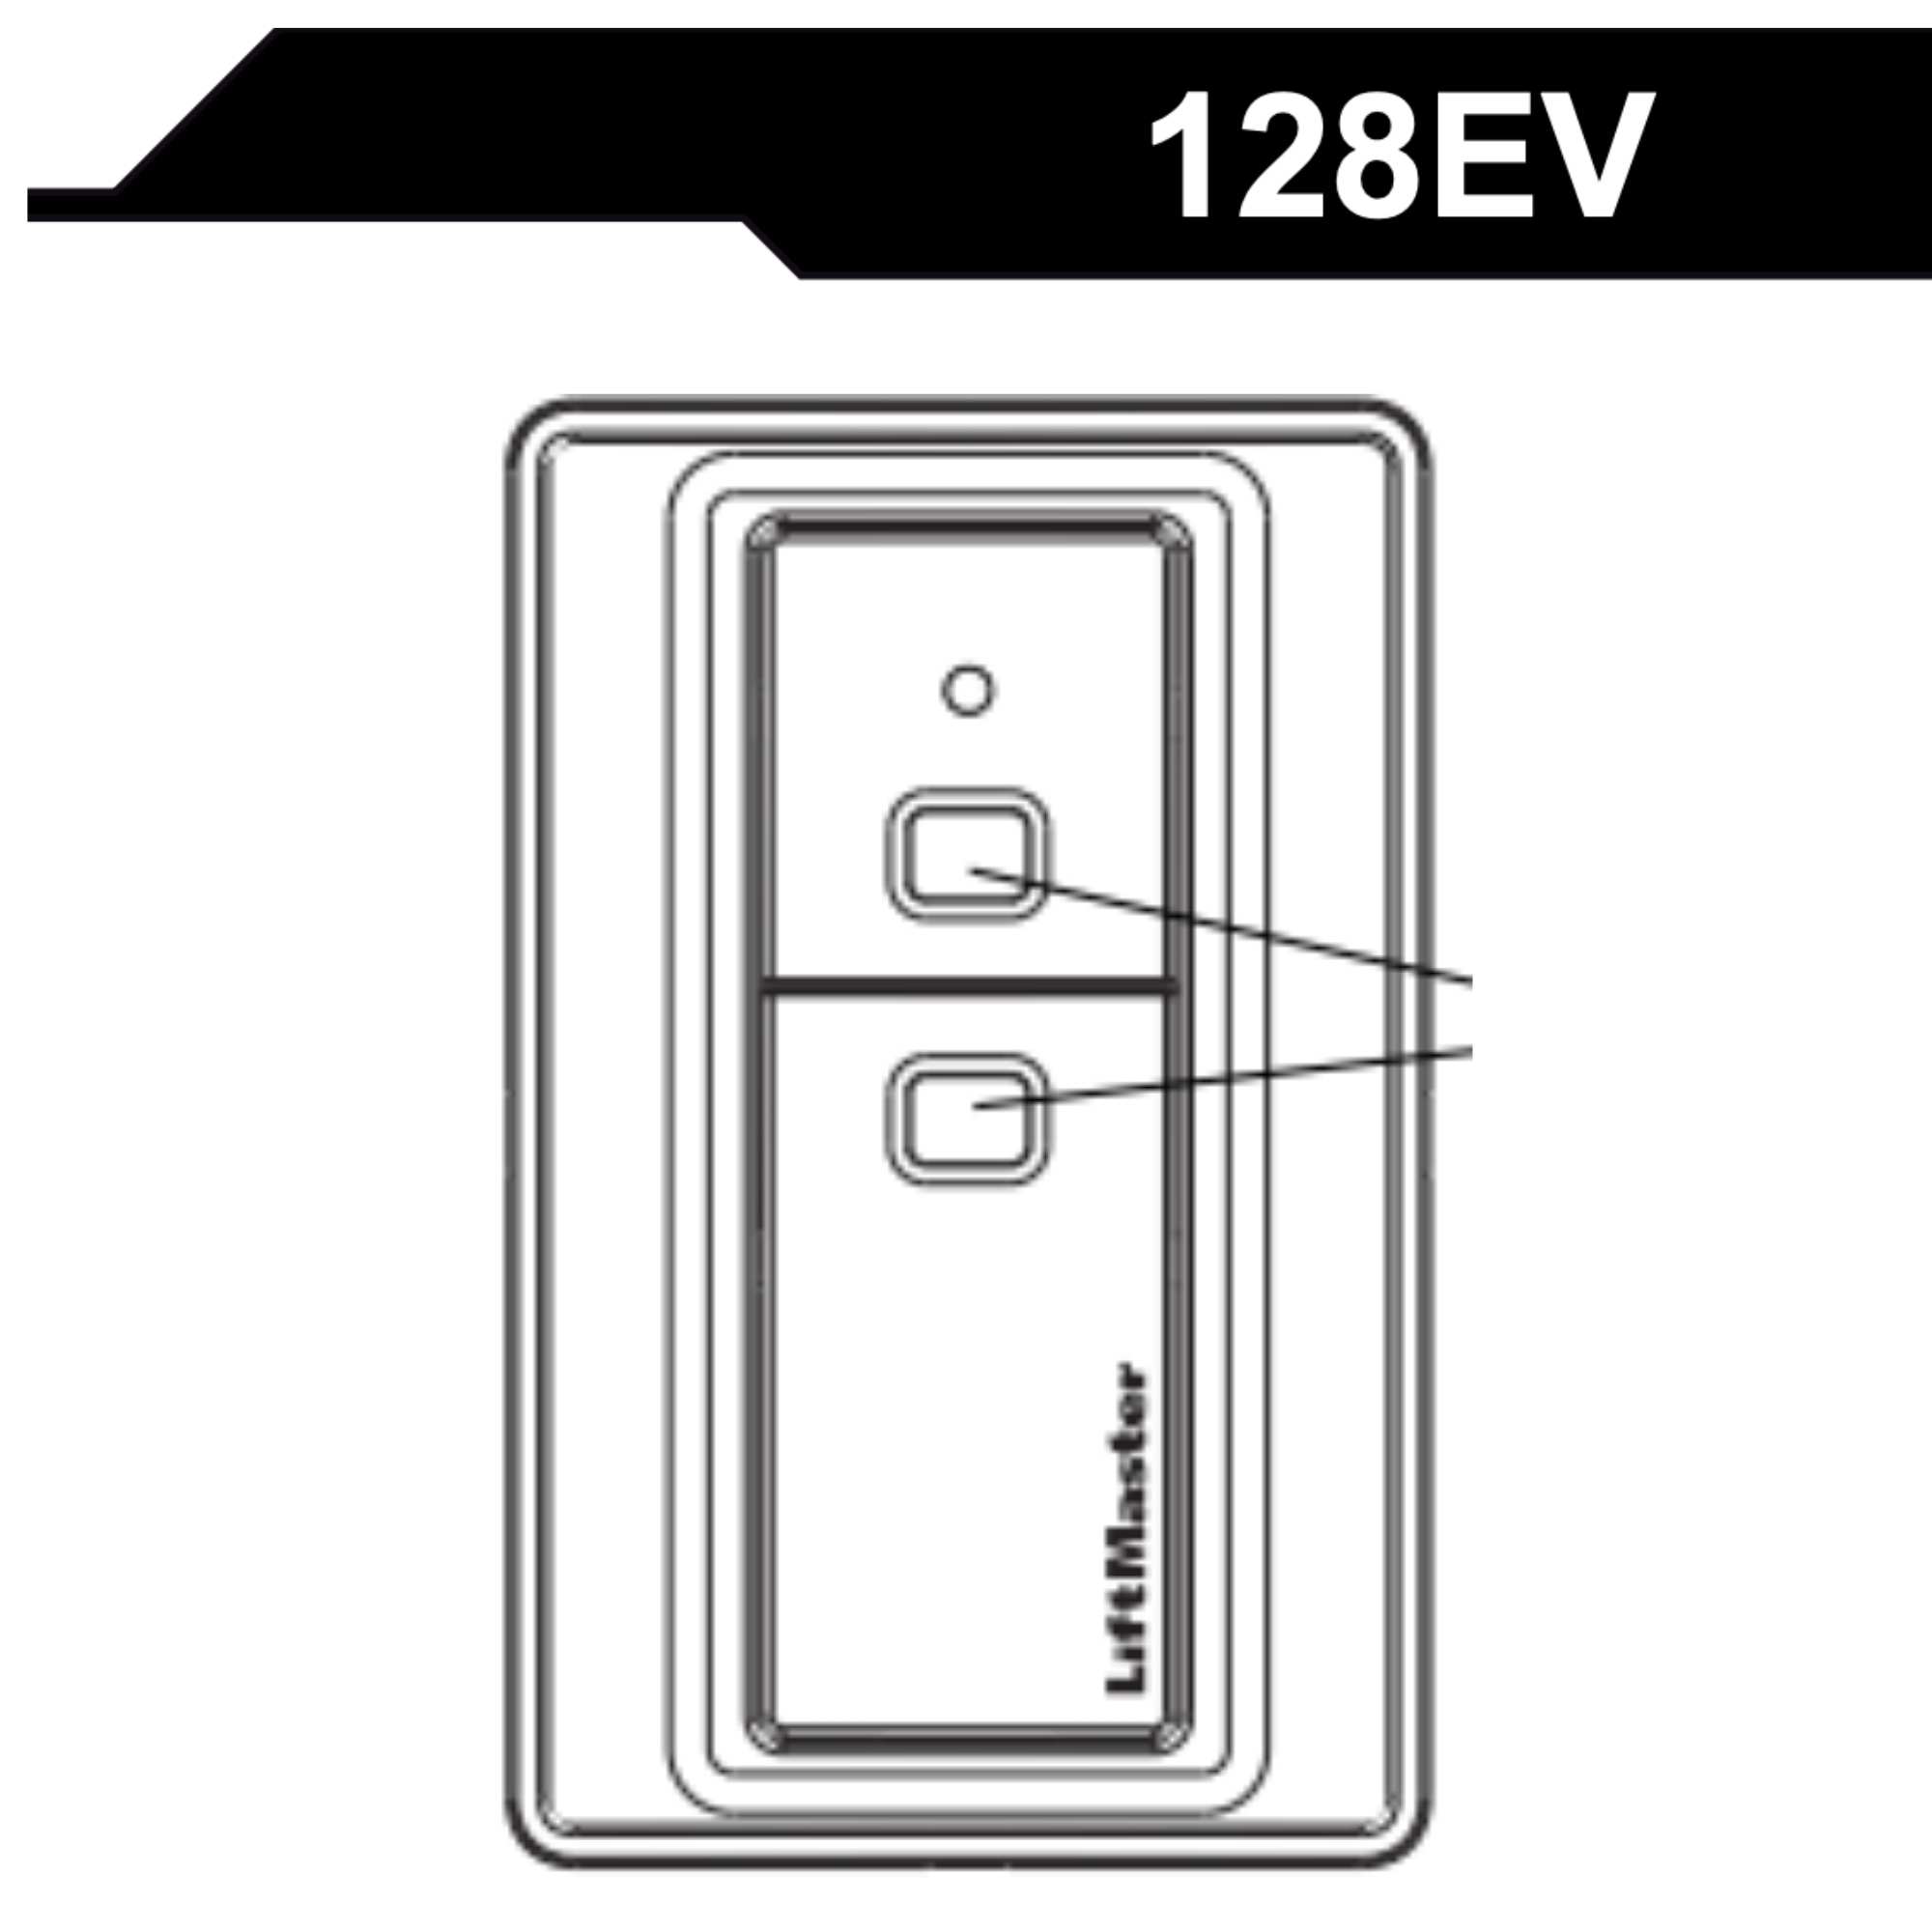 Manual 128EV tråløs veggbryter 2 kanal